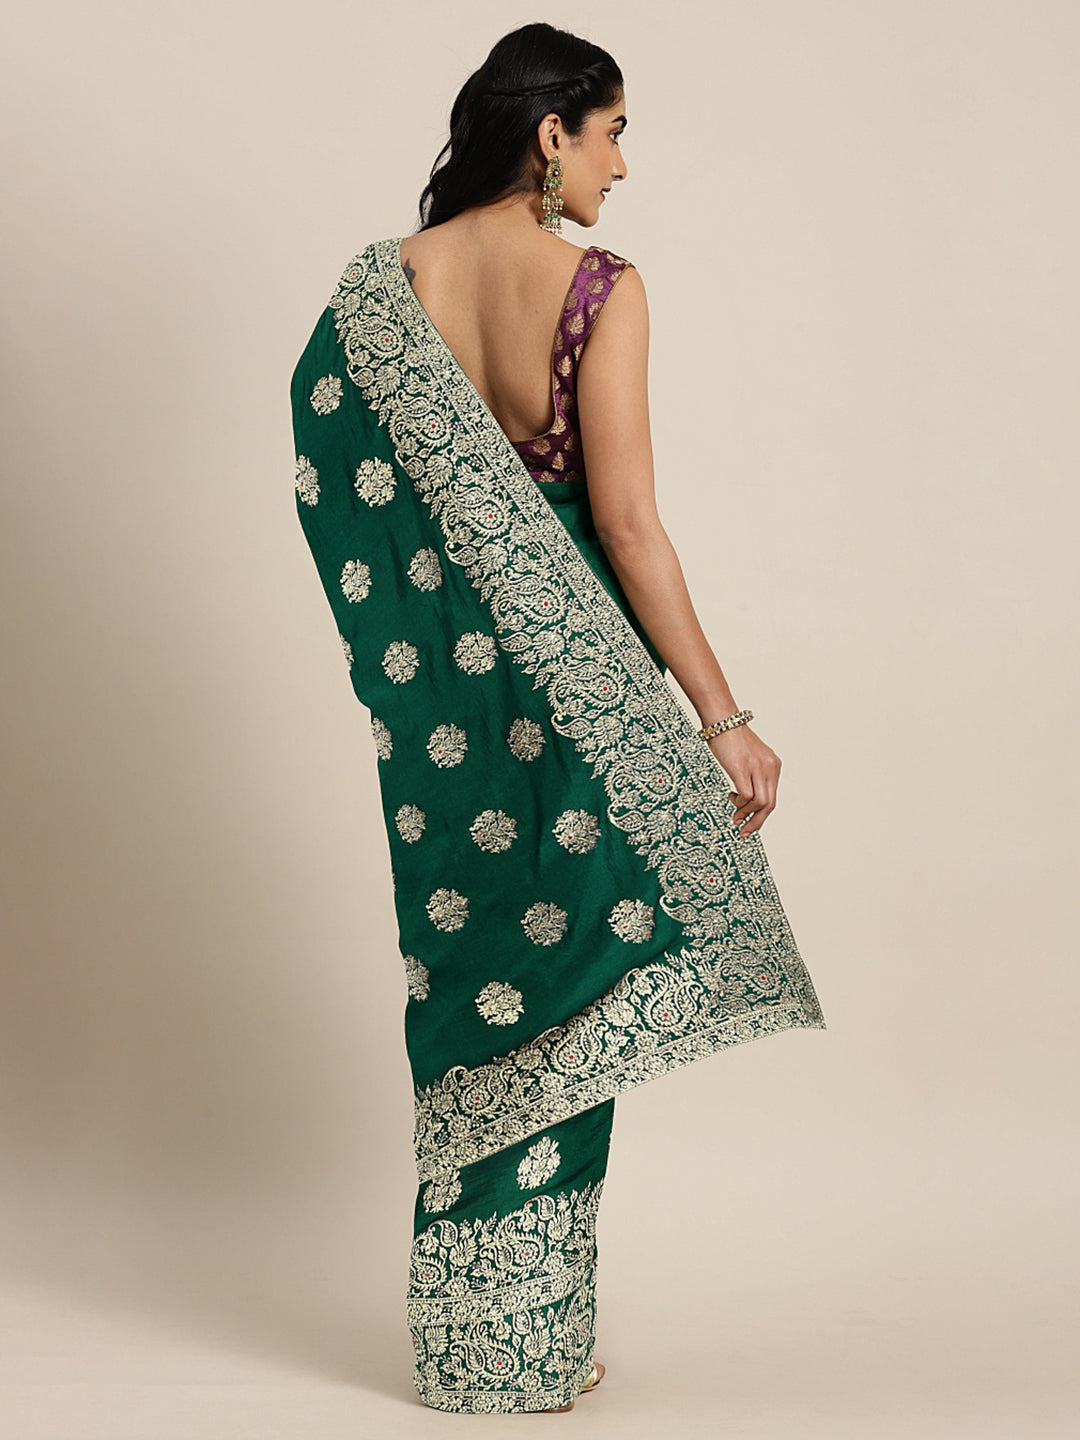 Neeru's Green Textured Saree With Blouse